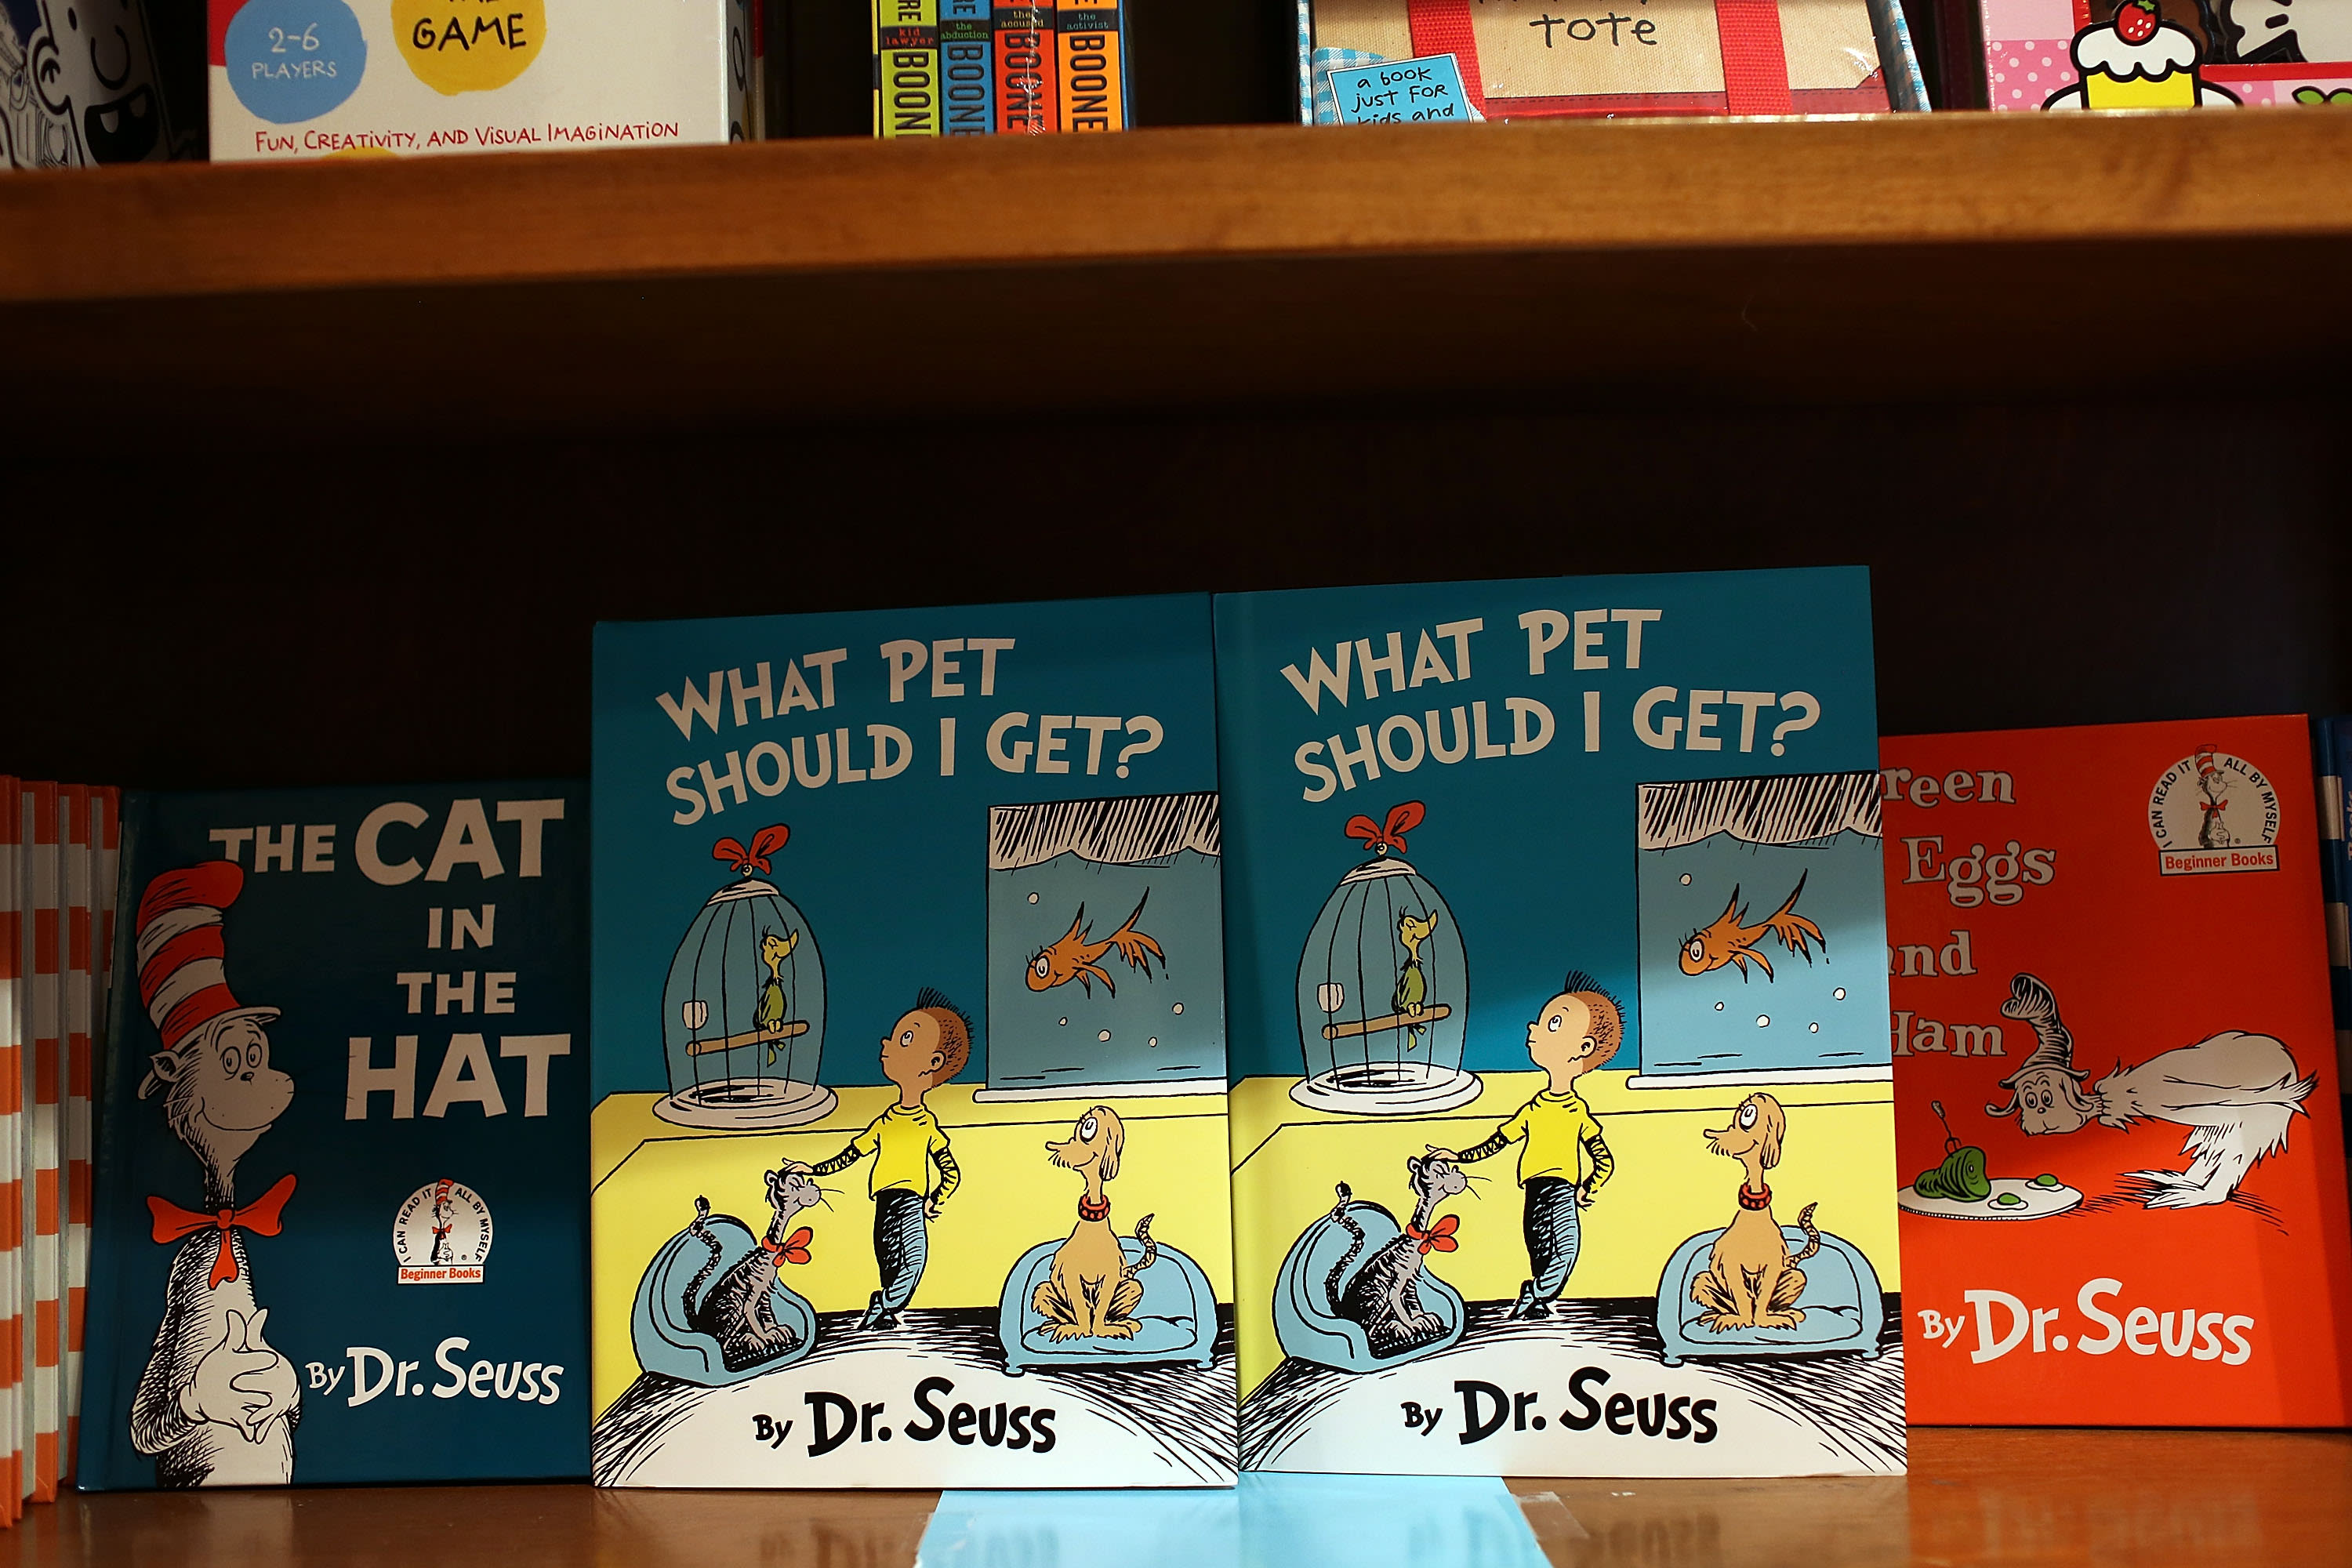 Dr. Seuss’s books top the Amazon bestseller list